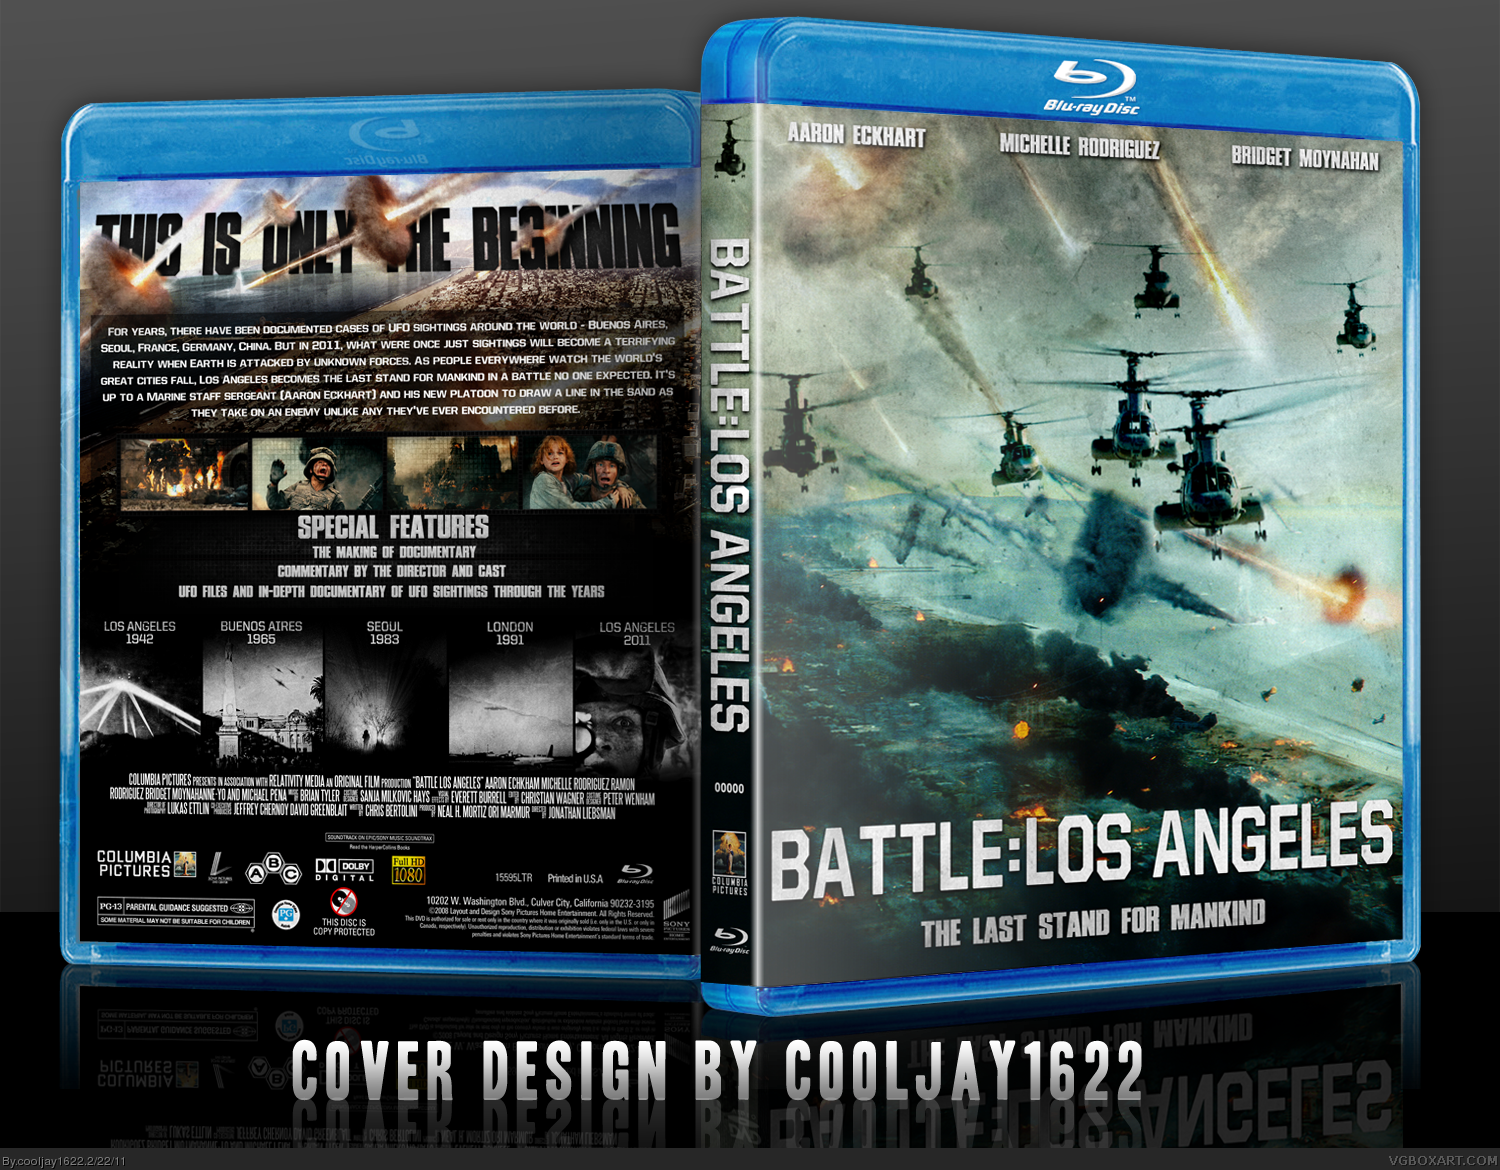 Battle:Los Angeles box cover